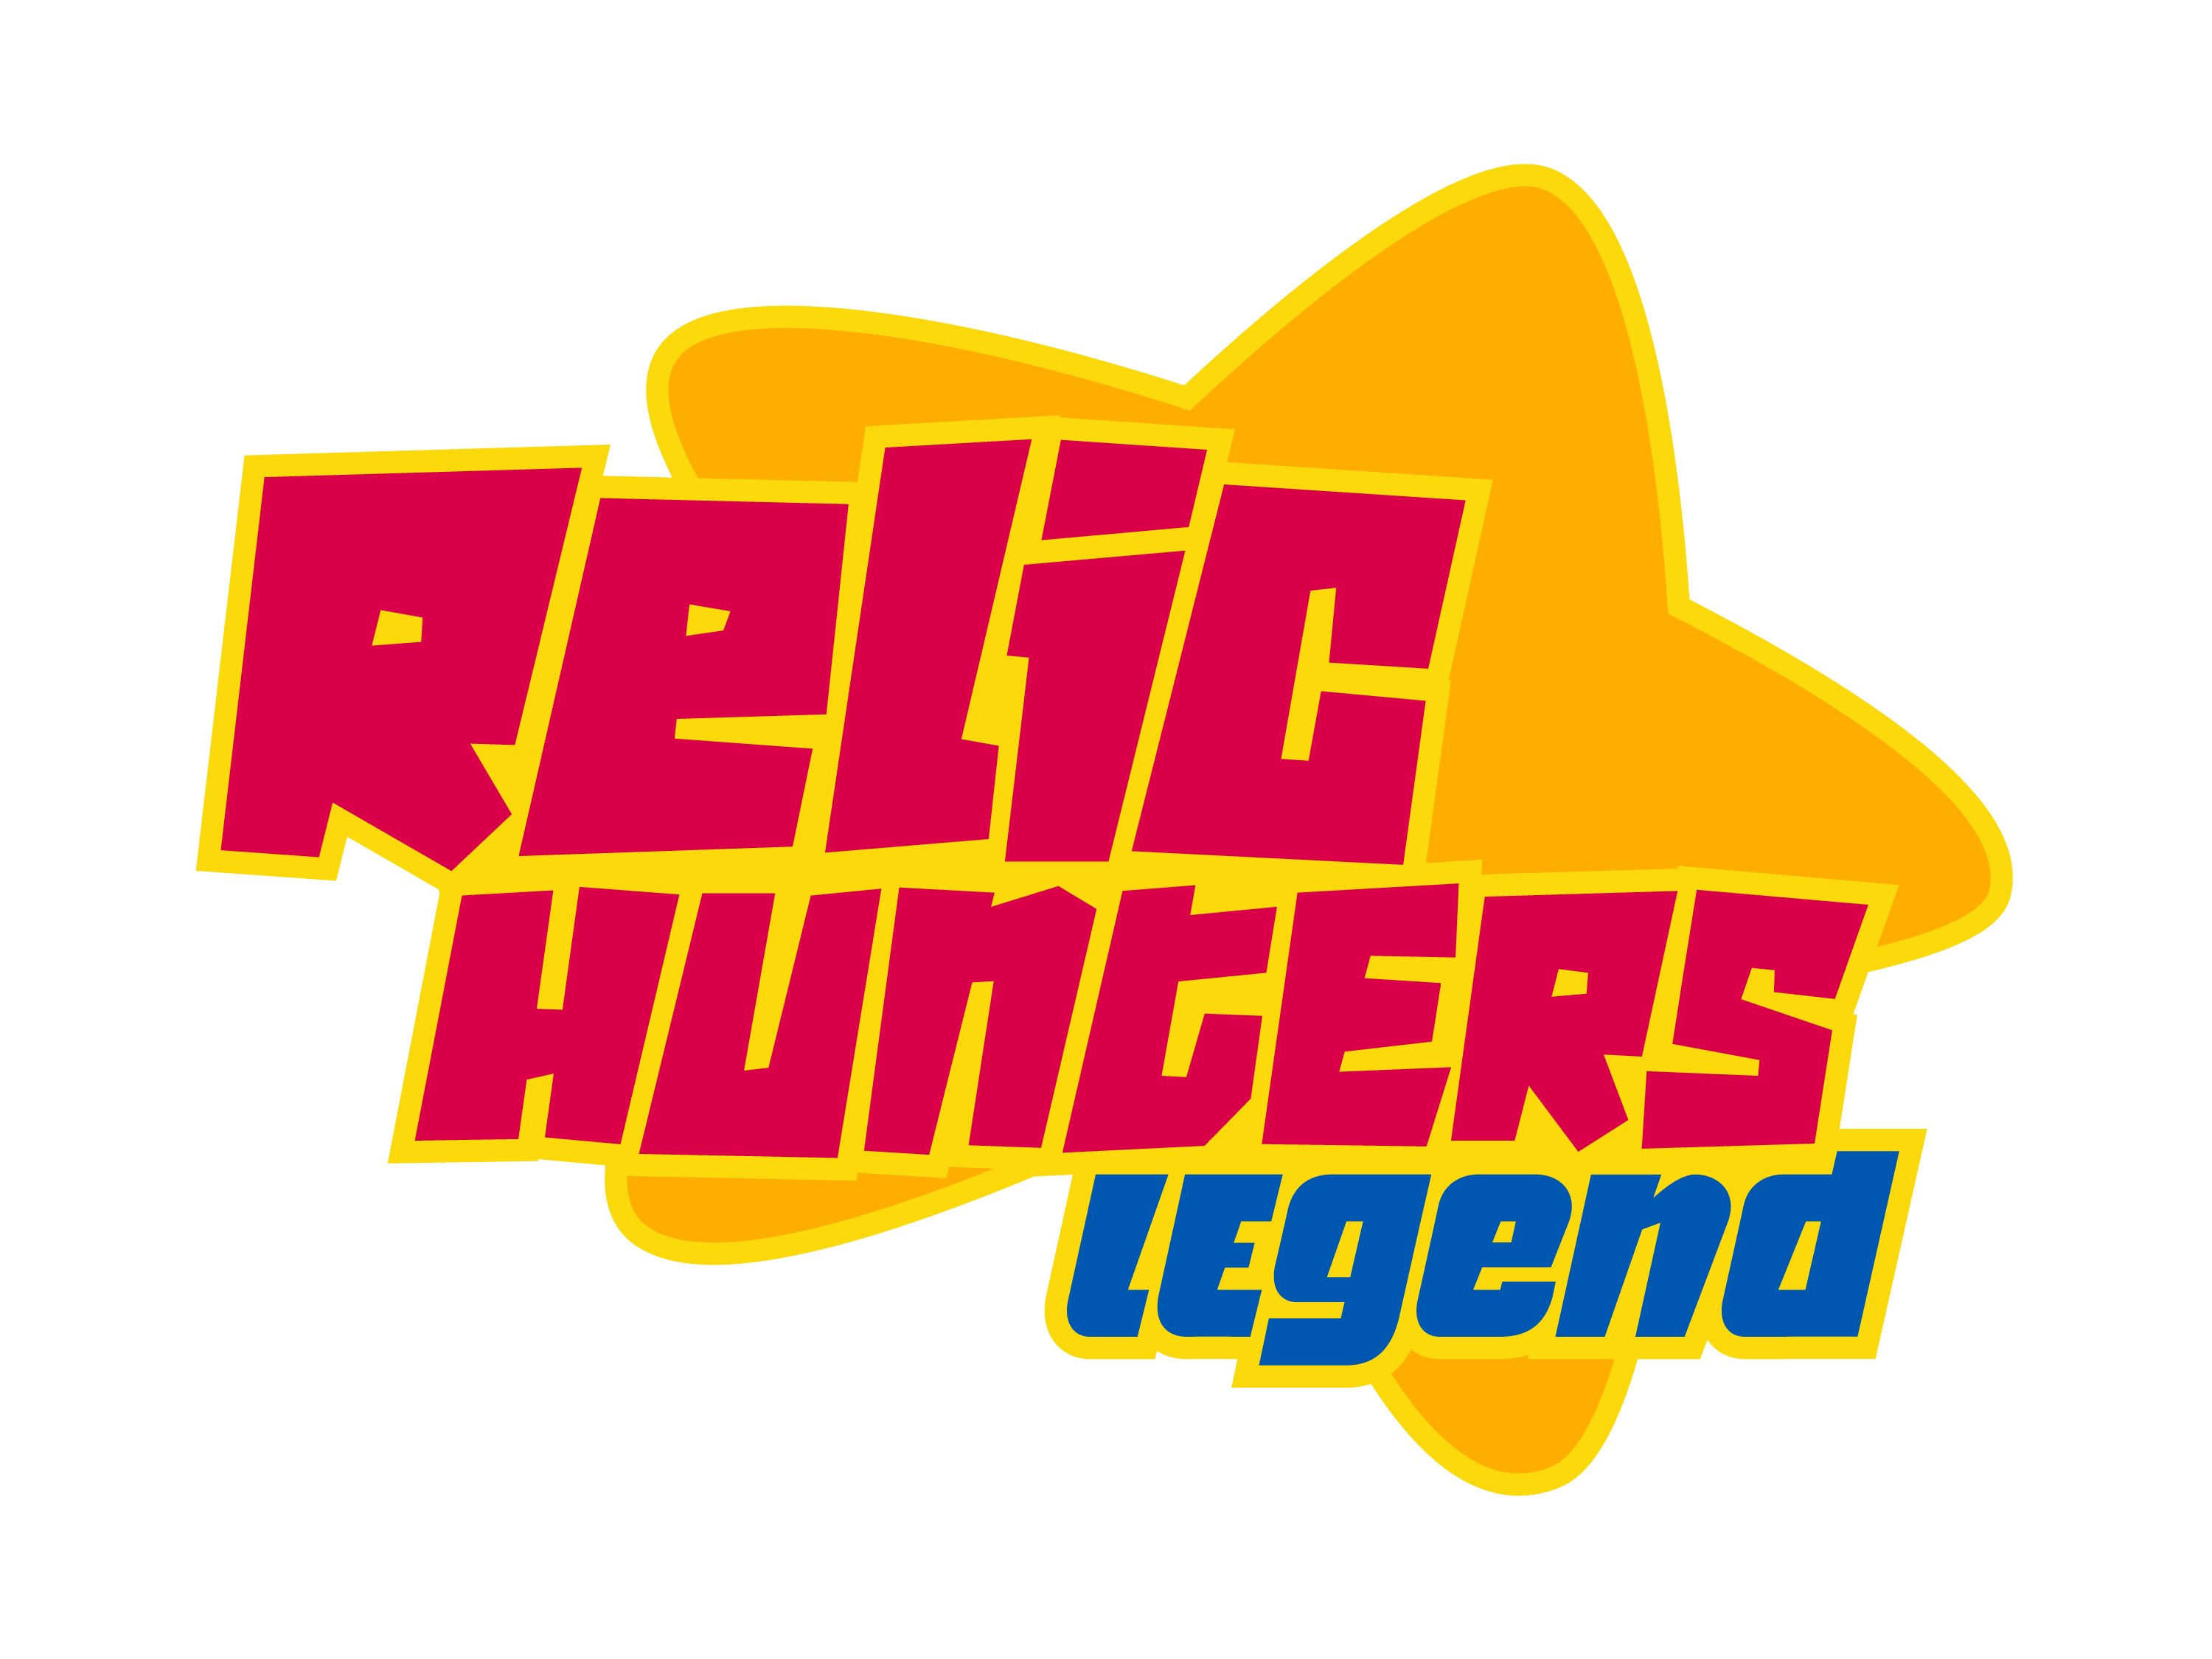 Rogue Snail - Joguem Relic Hunters Legend! on X: ⭐️ Somos Rogue